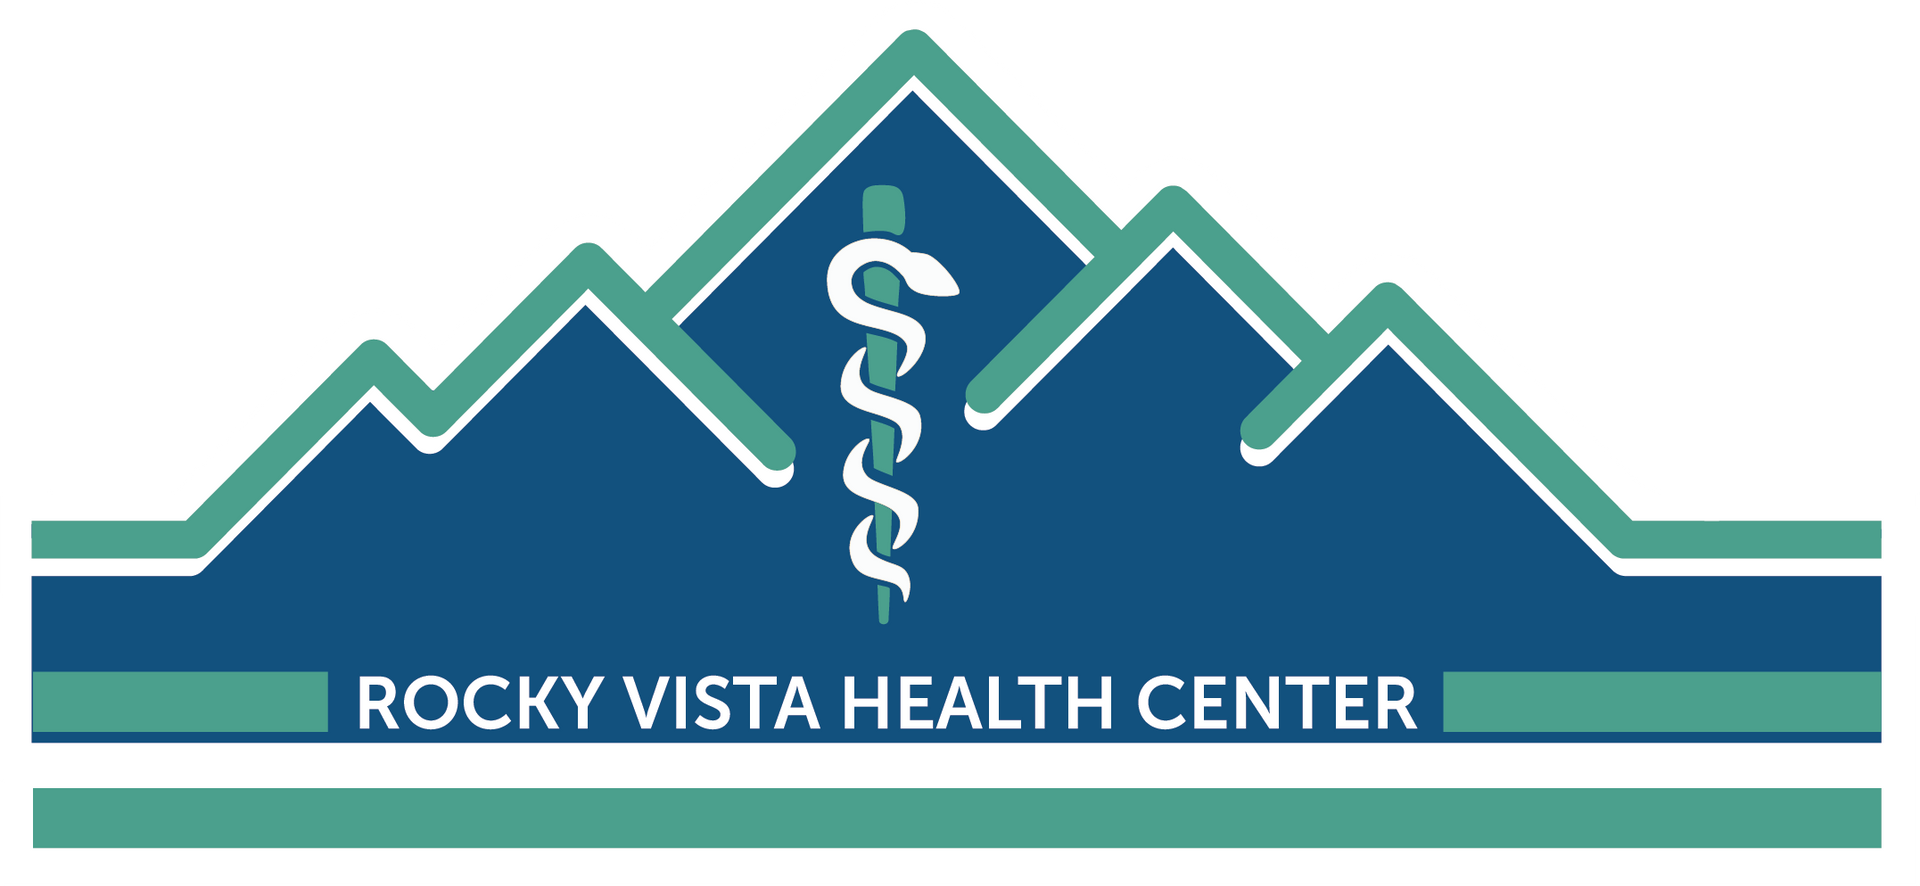 Rocky Vista Health Center